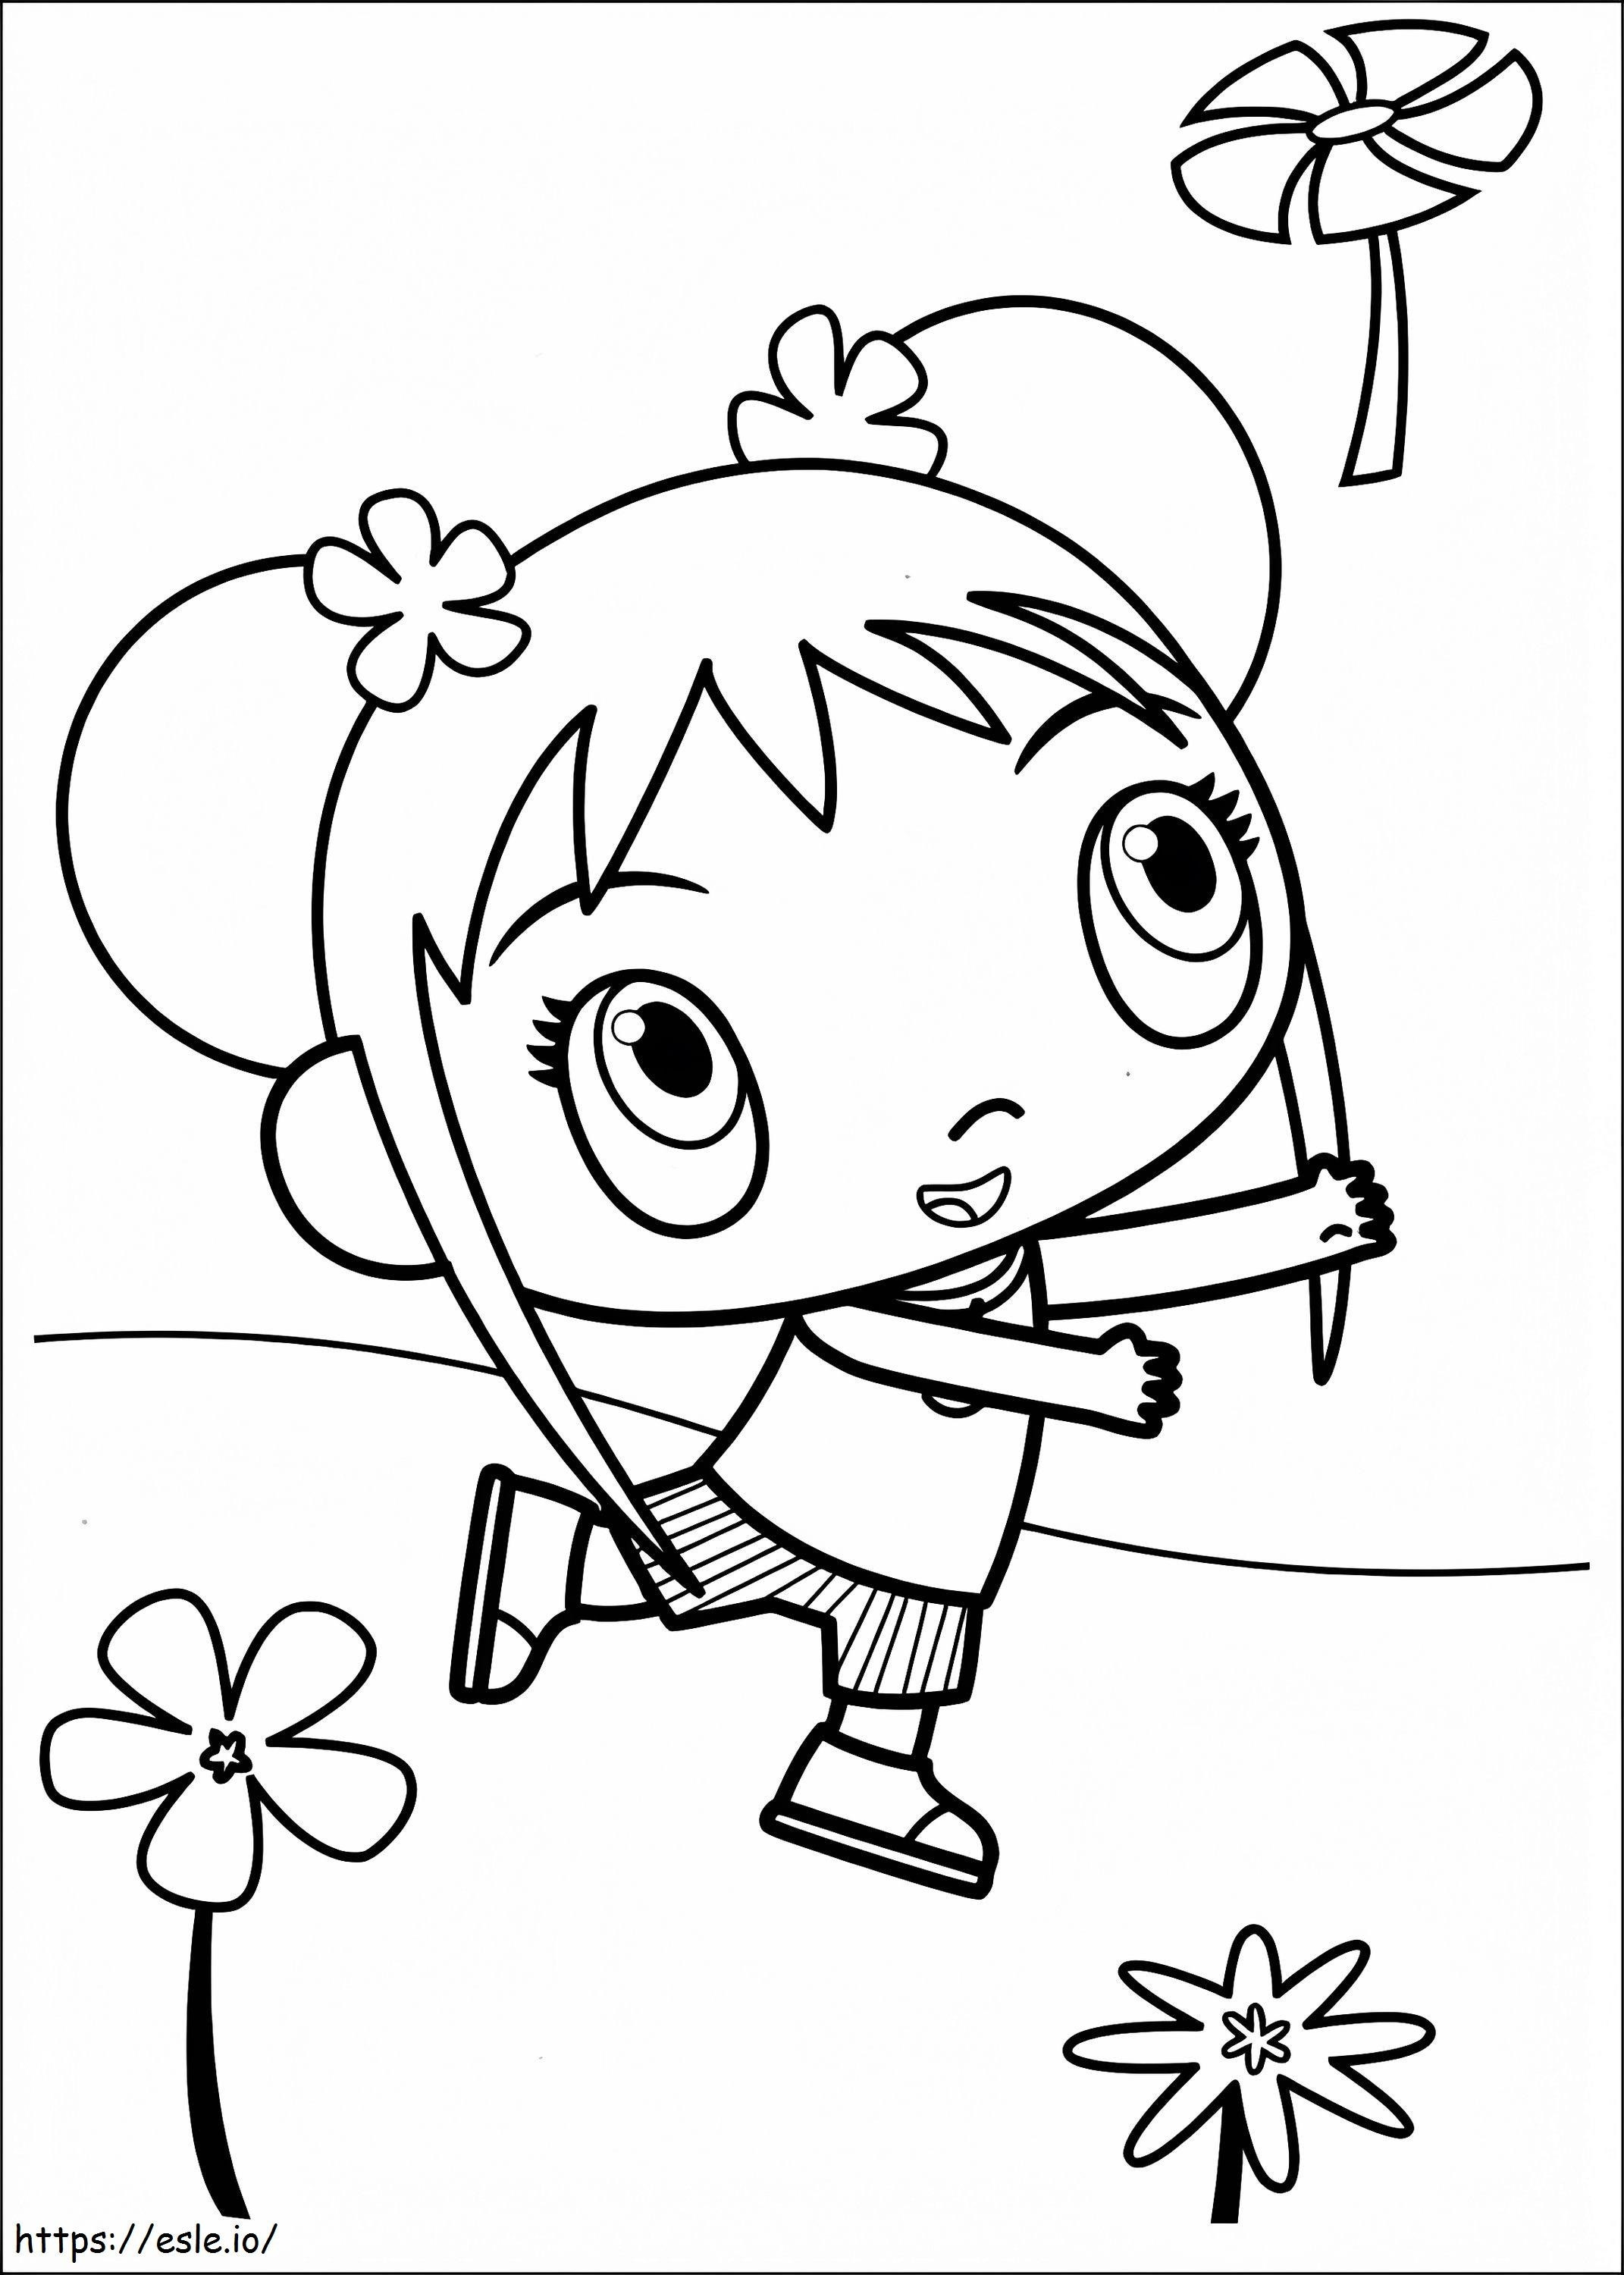 Kai Lan And Flowers coloring page